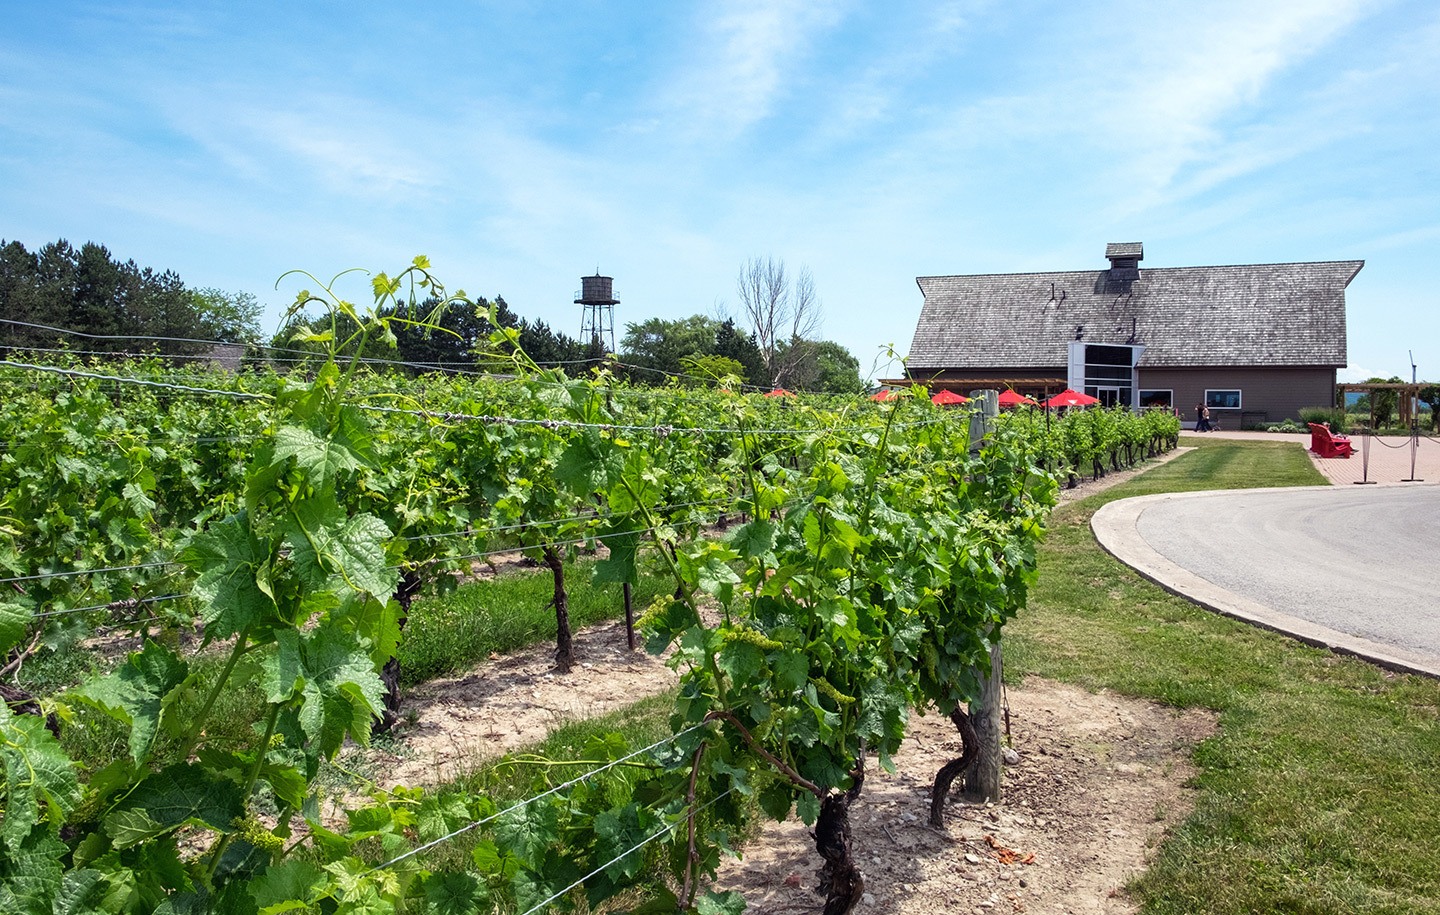 Vineyards at the Inniskillin winery in the Niagara wine region